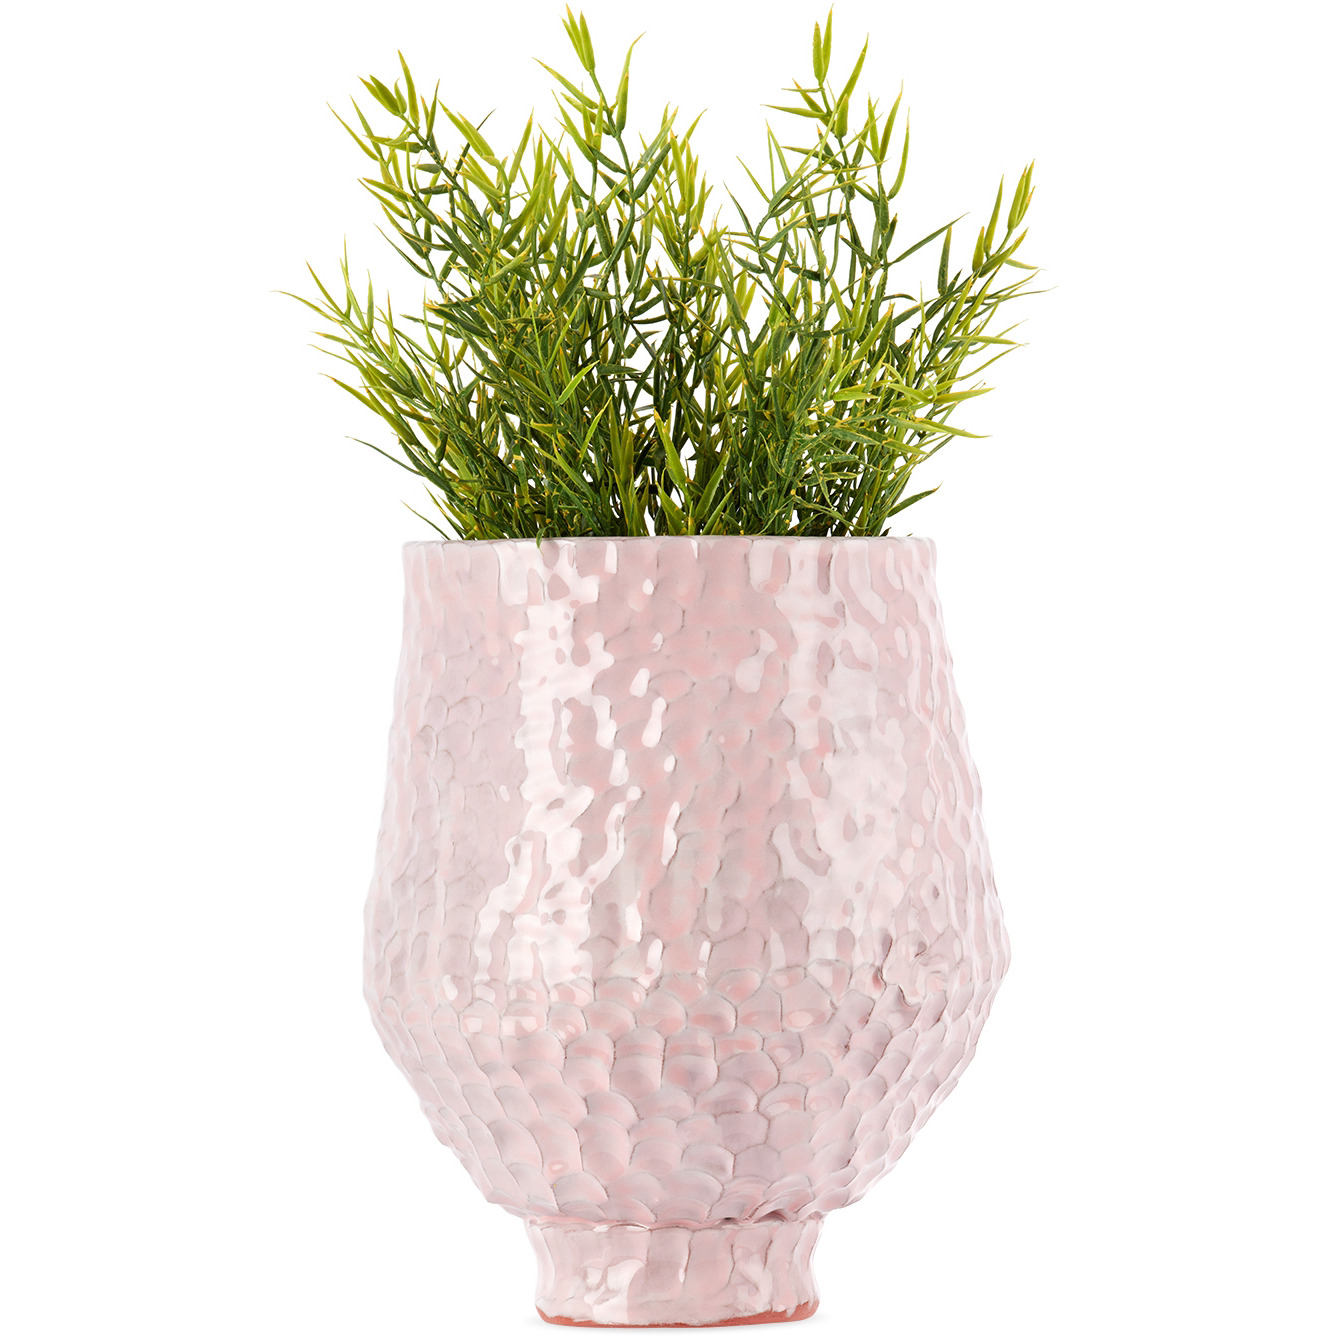 GERSTLEY Pink Large Ceramic Vase - image 1